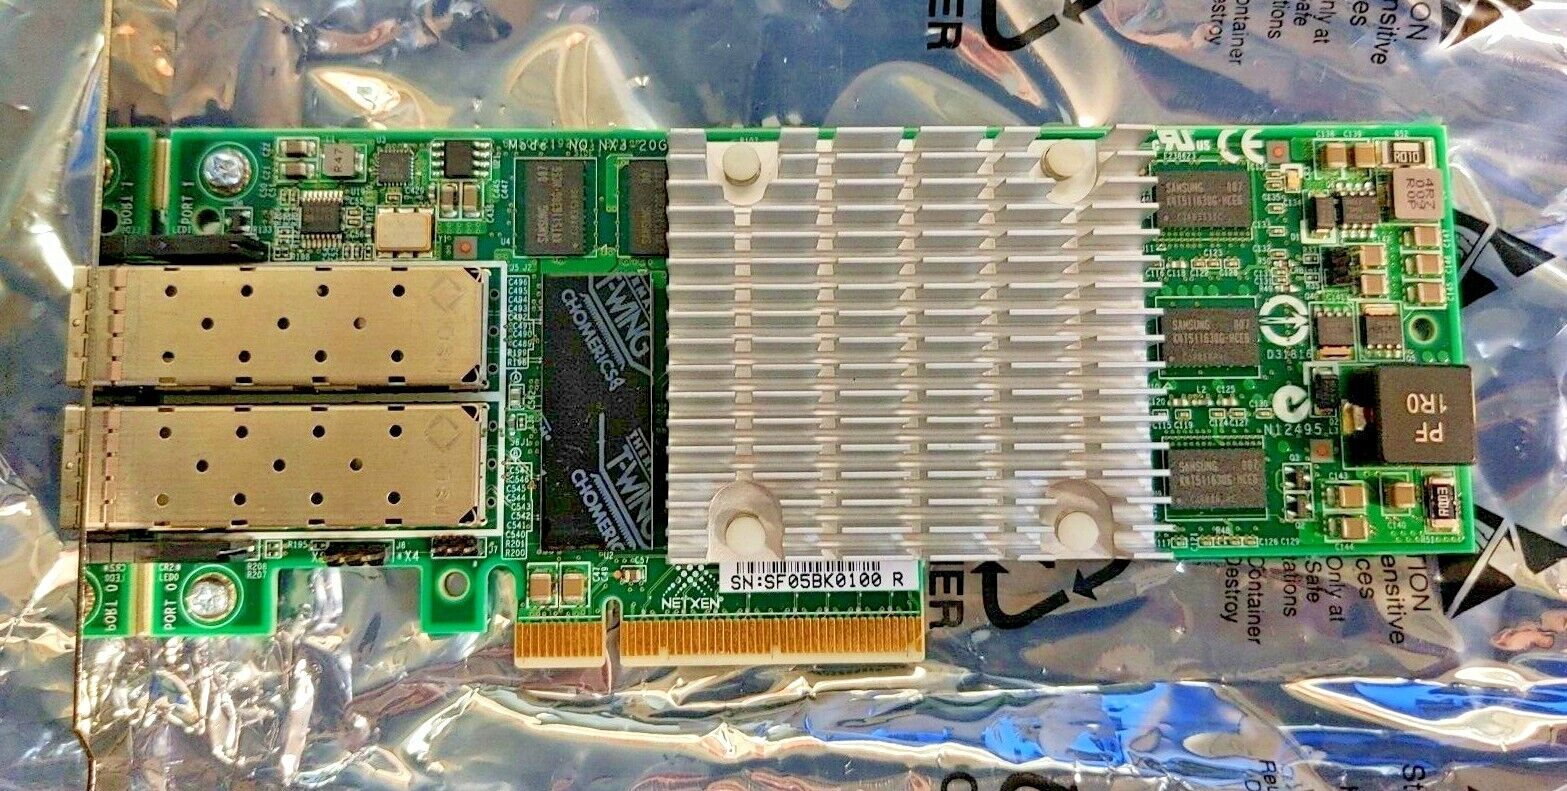 Netxen 10GBase-SR NX3-20G Dual Port  PCI-E x8 HBA Full +2 Finisar FTLX8571D3BCL 